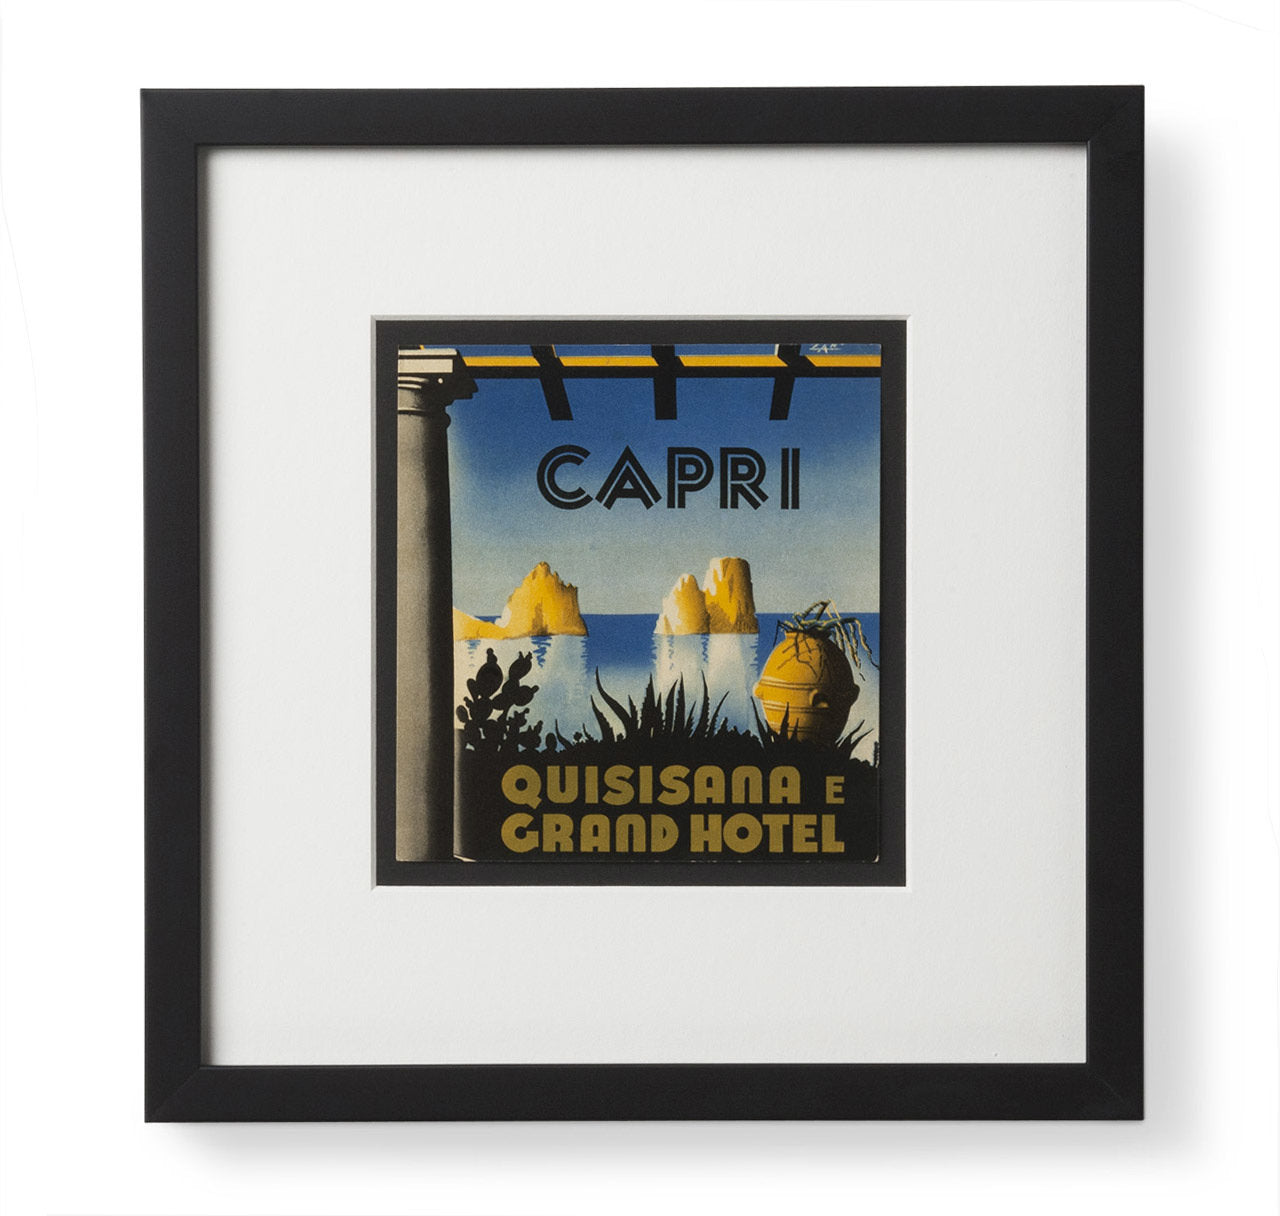 Framed Grand Hotel Quisisana Capri Luggage Label